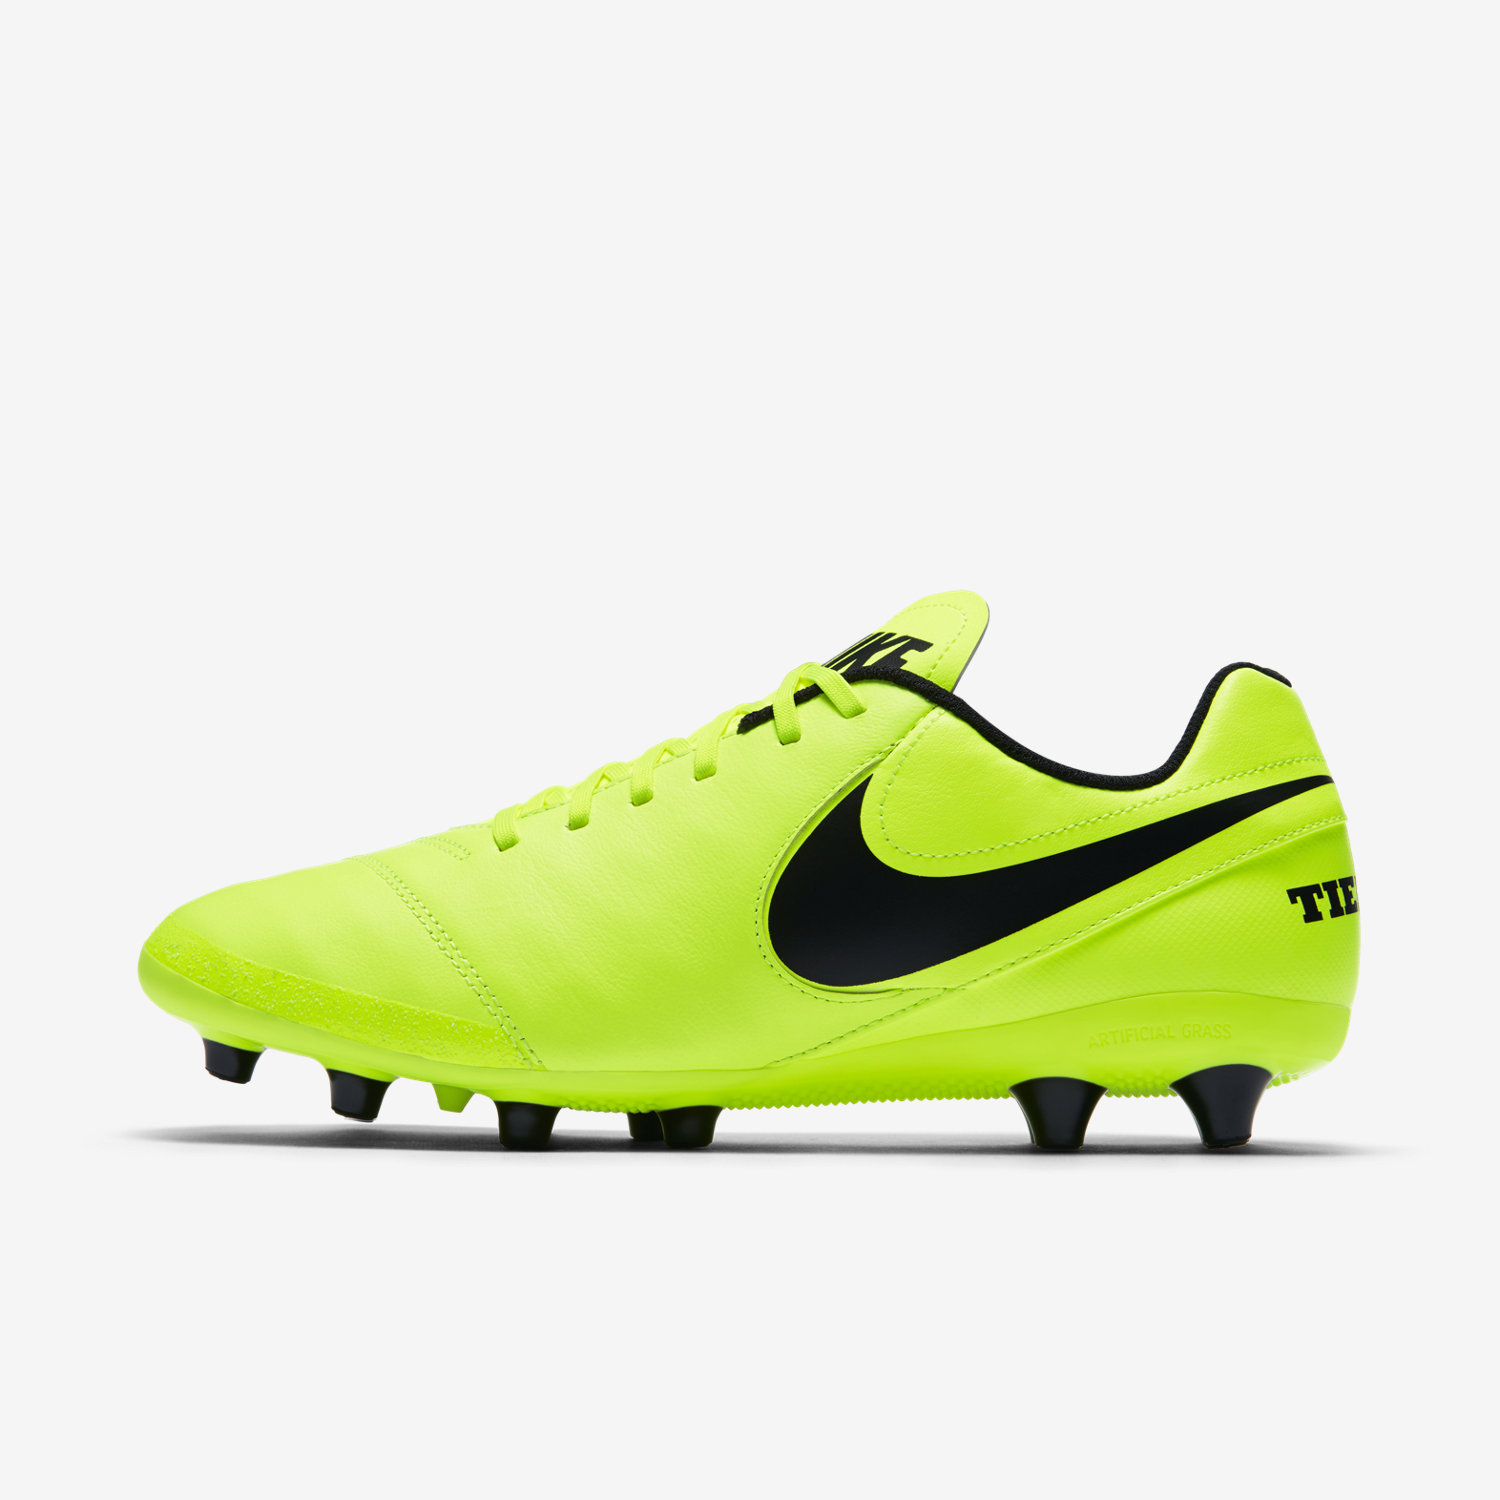 Nike Tiempo Genio II Leather AG-PRO - Men's Artificial-Grass Football Boot